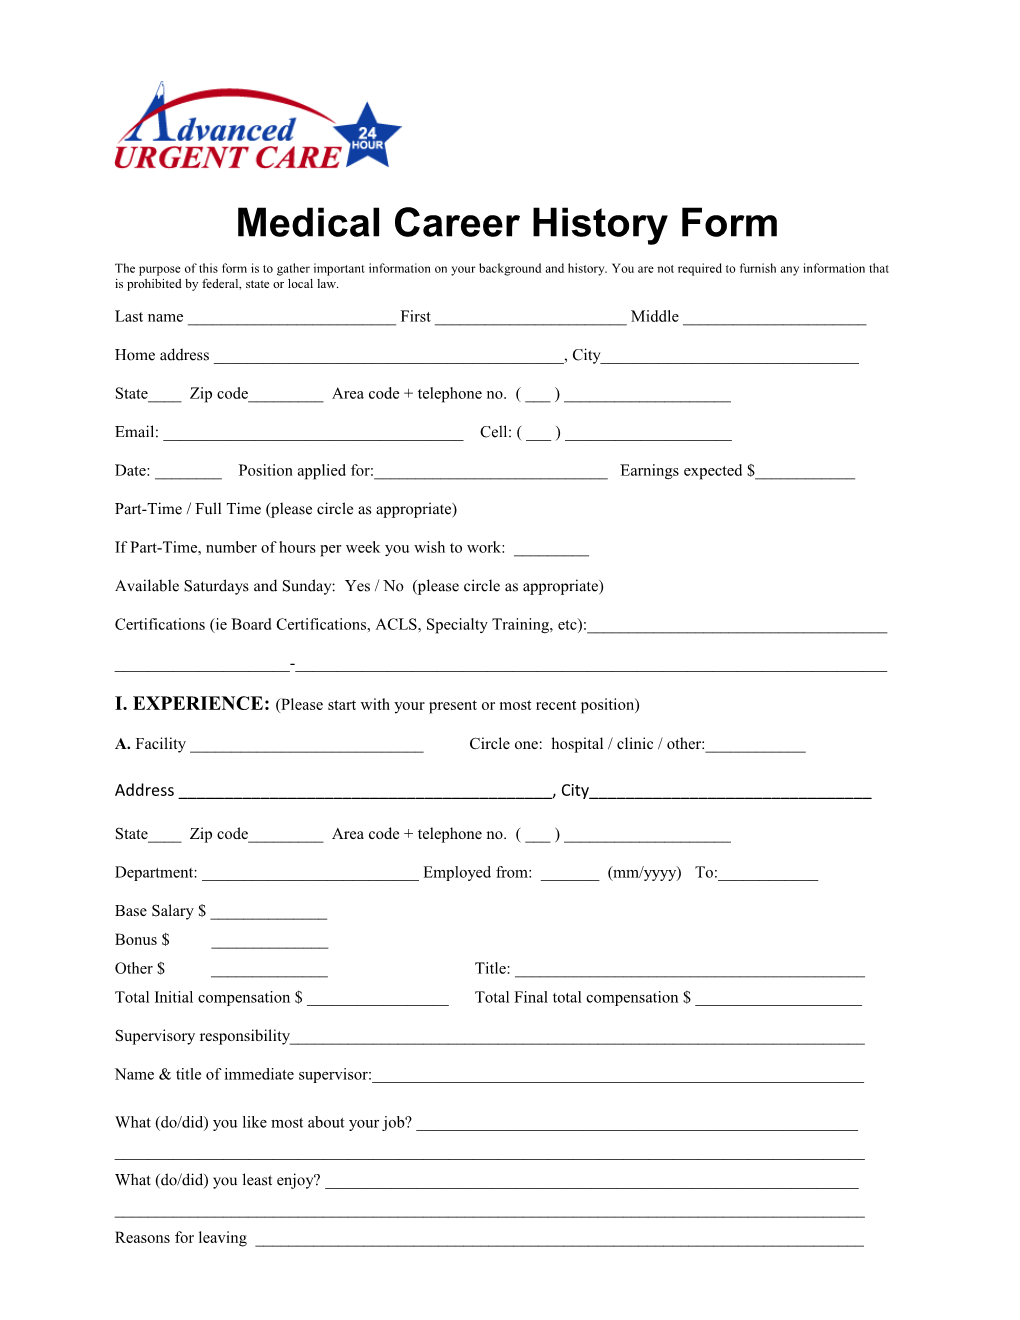 Medical Career History Form